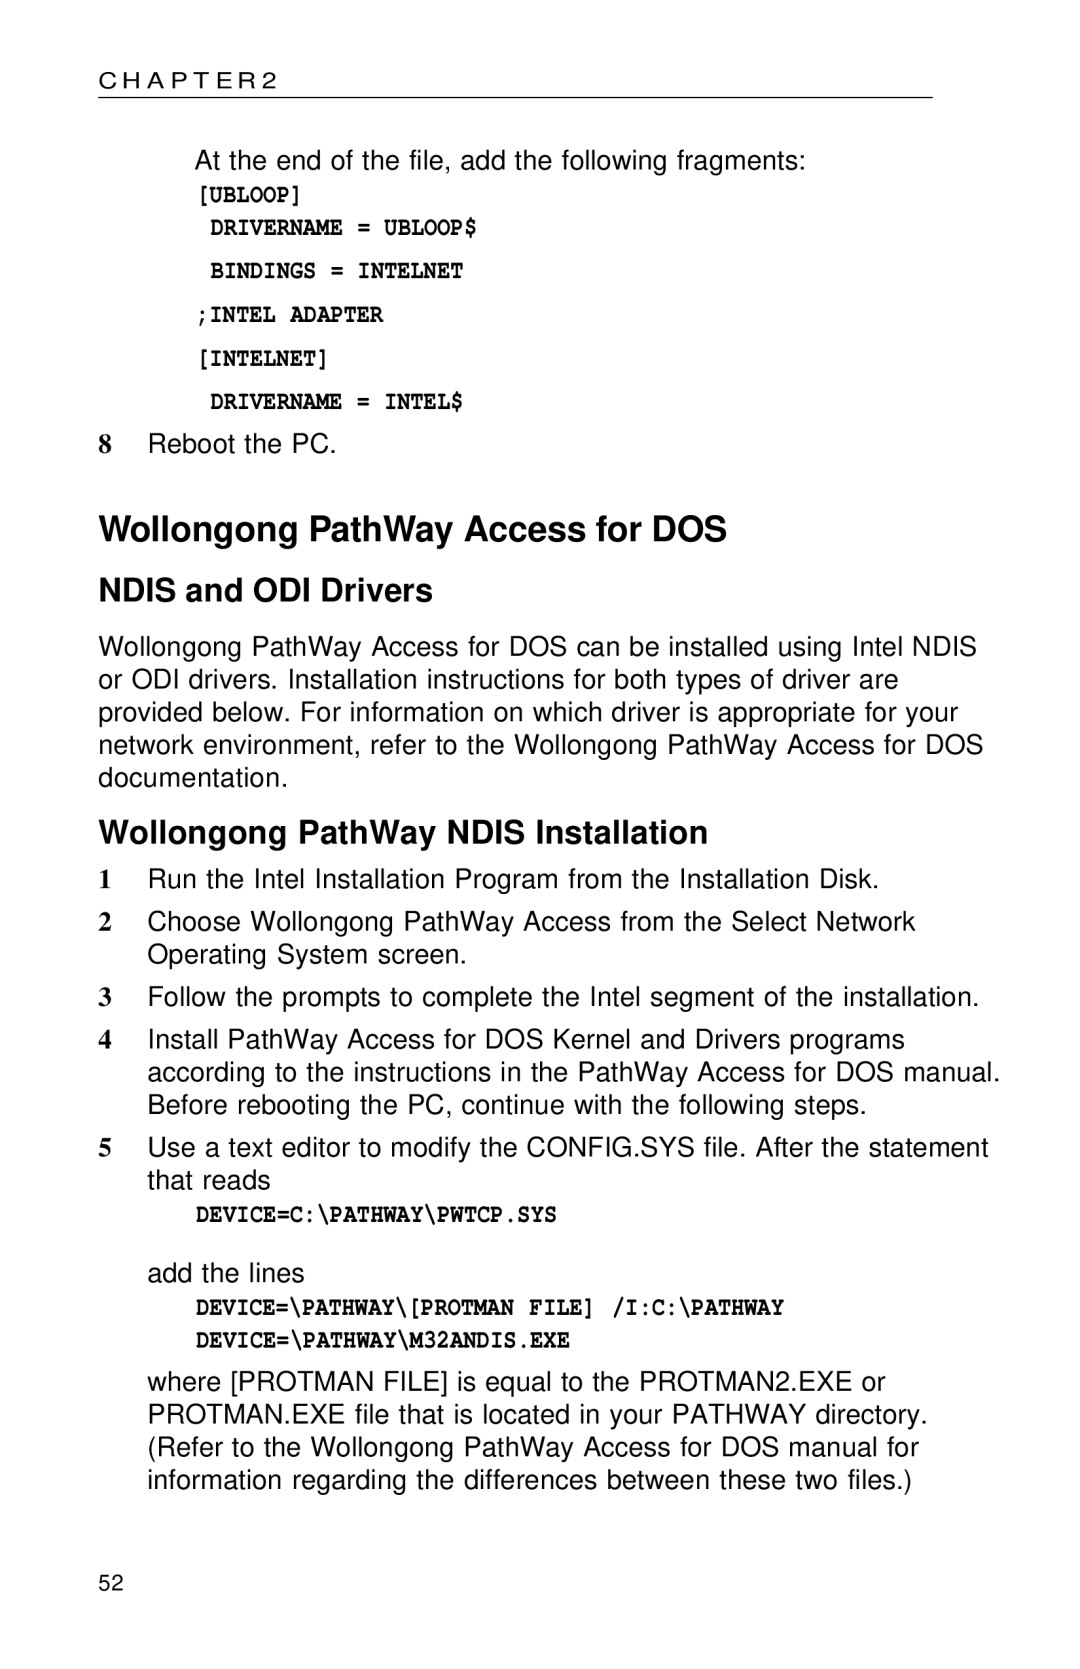 Intel PRO appendix Wollongong PathWay Access for DOS, Ndis and ODI Drivers, Wollongong PathWay Ndis Installation 